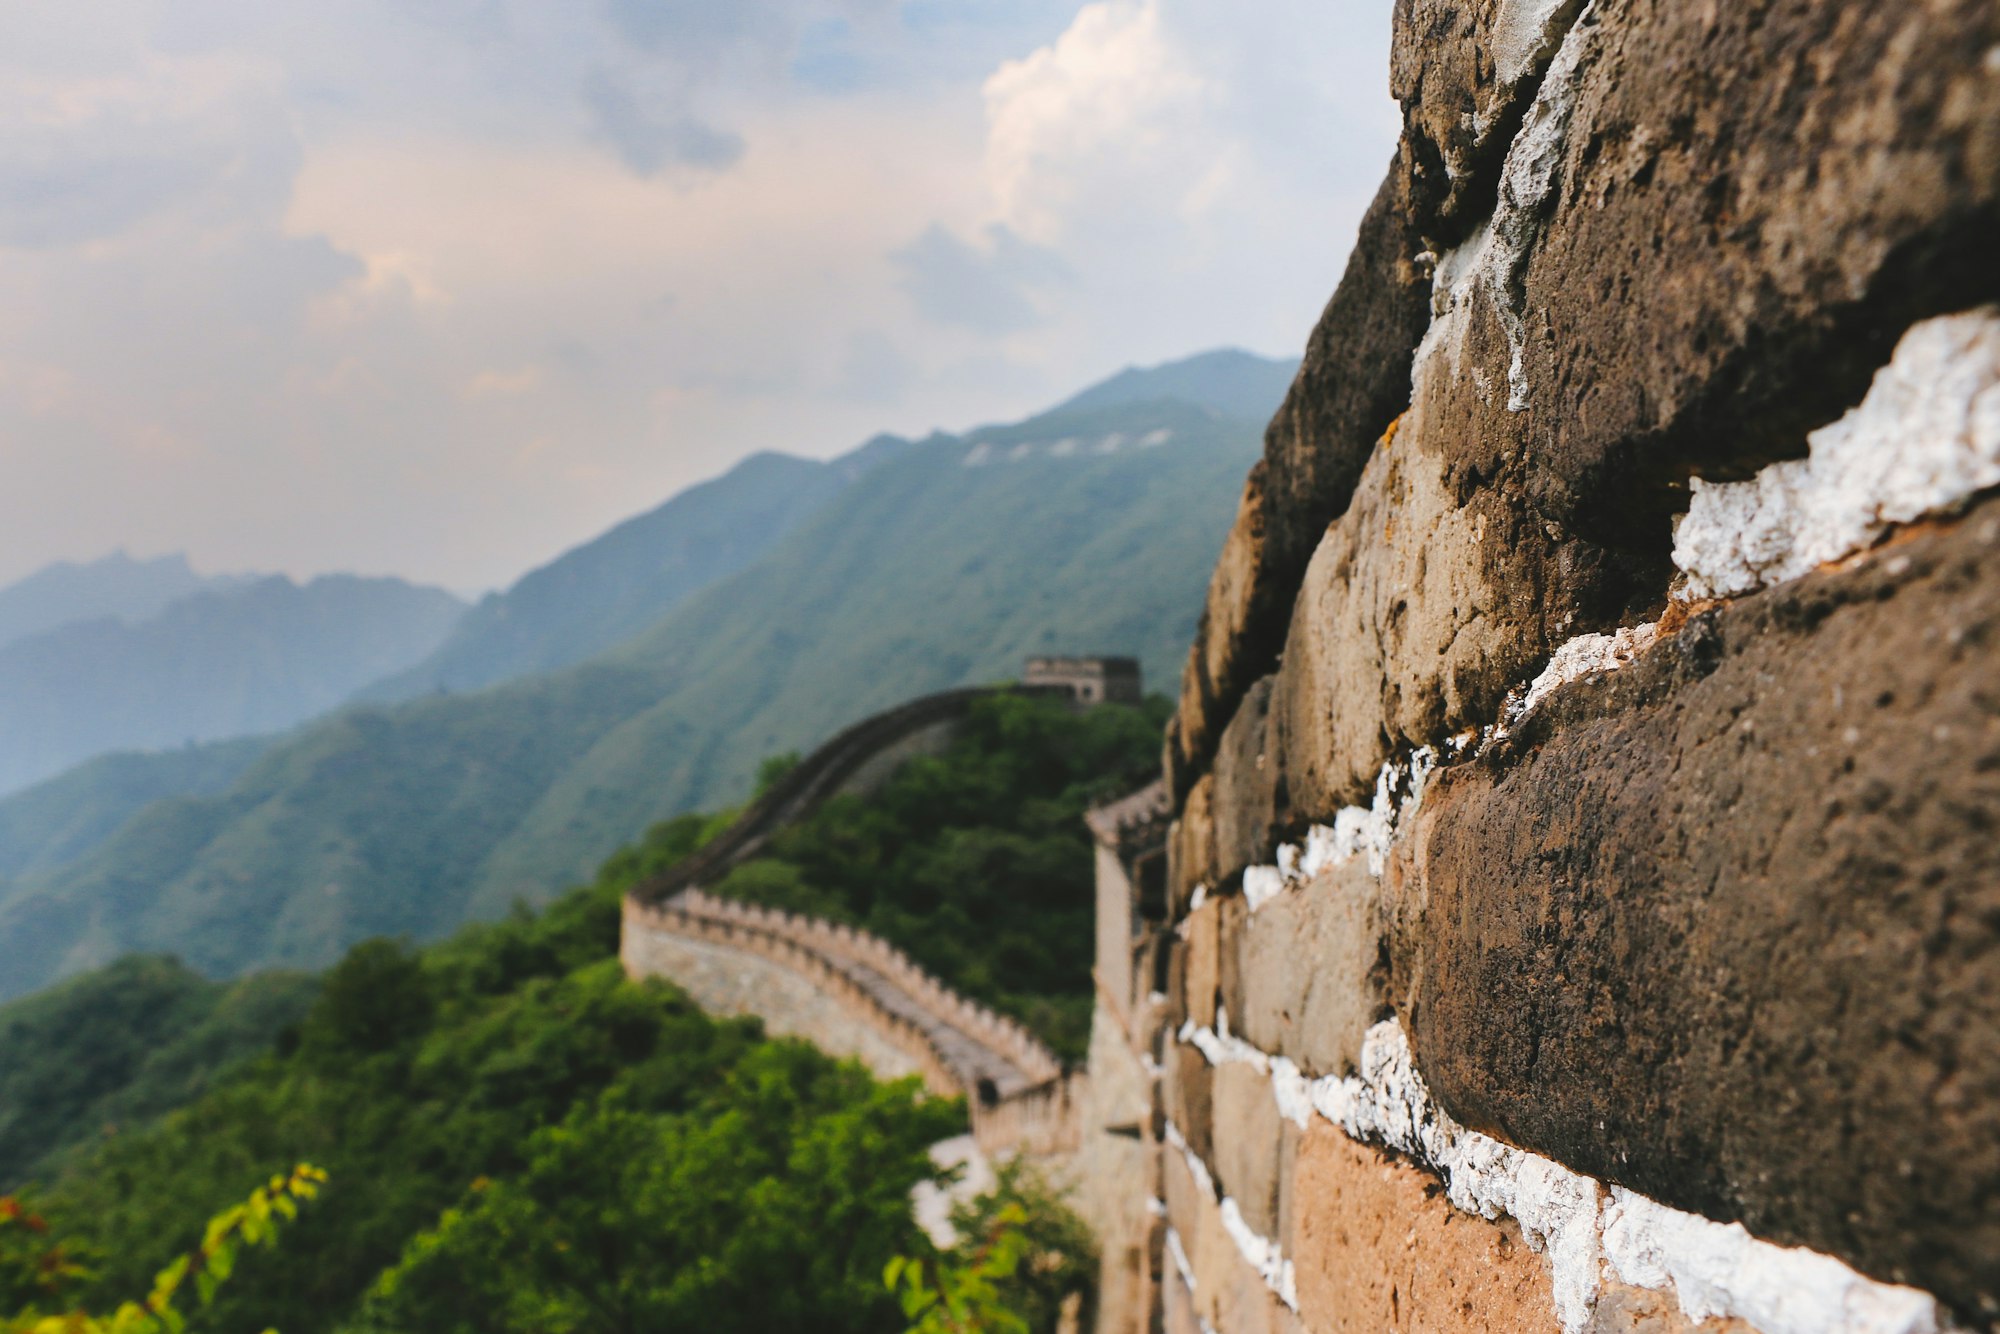 Great Wall of China. More on Instagram: @DiegoJimenez